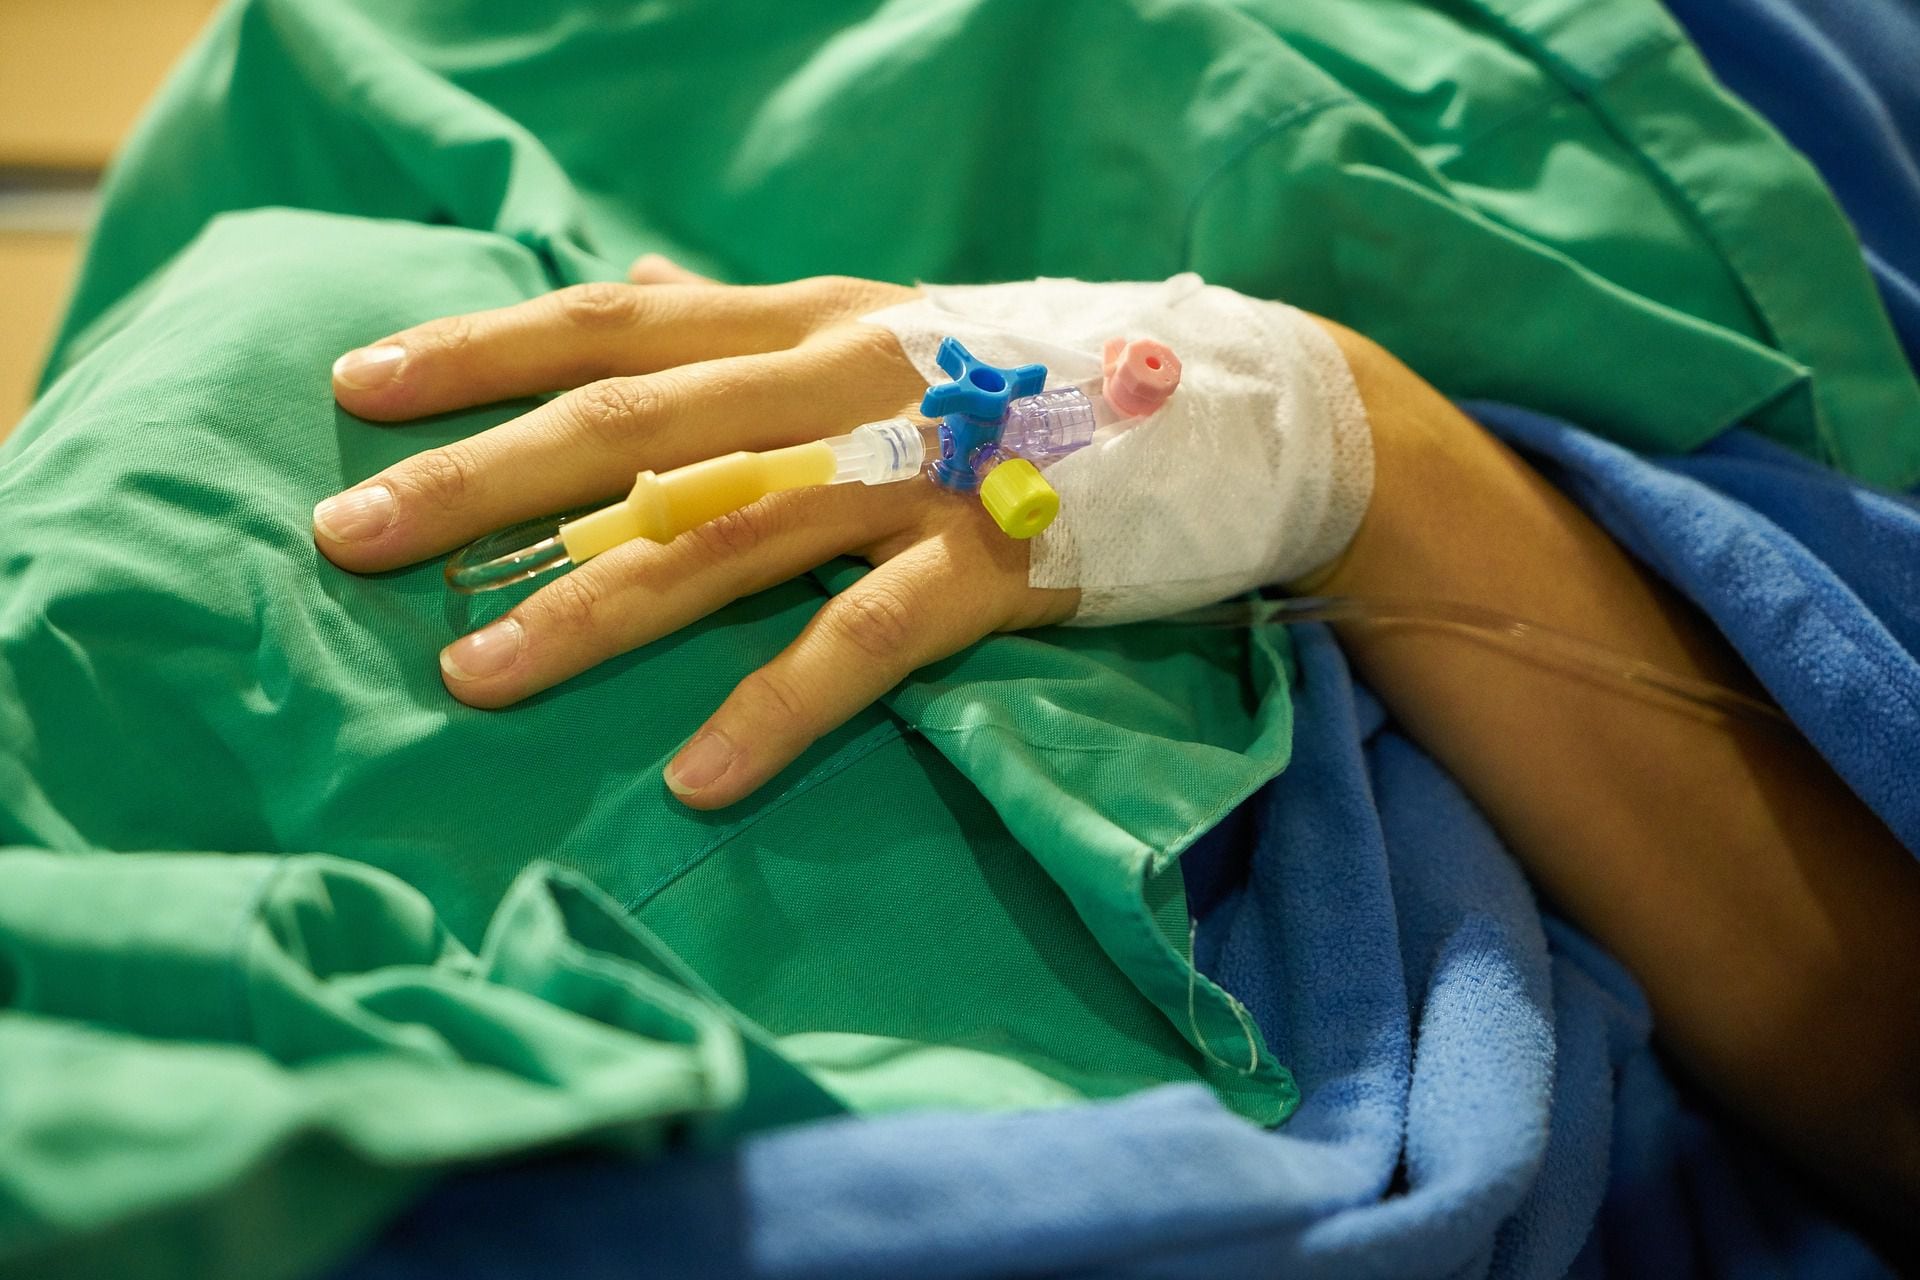 COVID-19: La OMS prevé ‘gran número’ de hospitalizaciones, aunque ómicron sea menos peligrosa